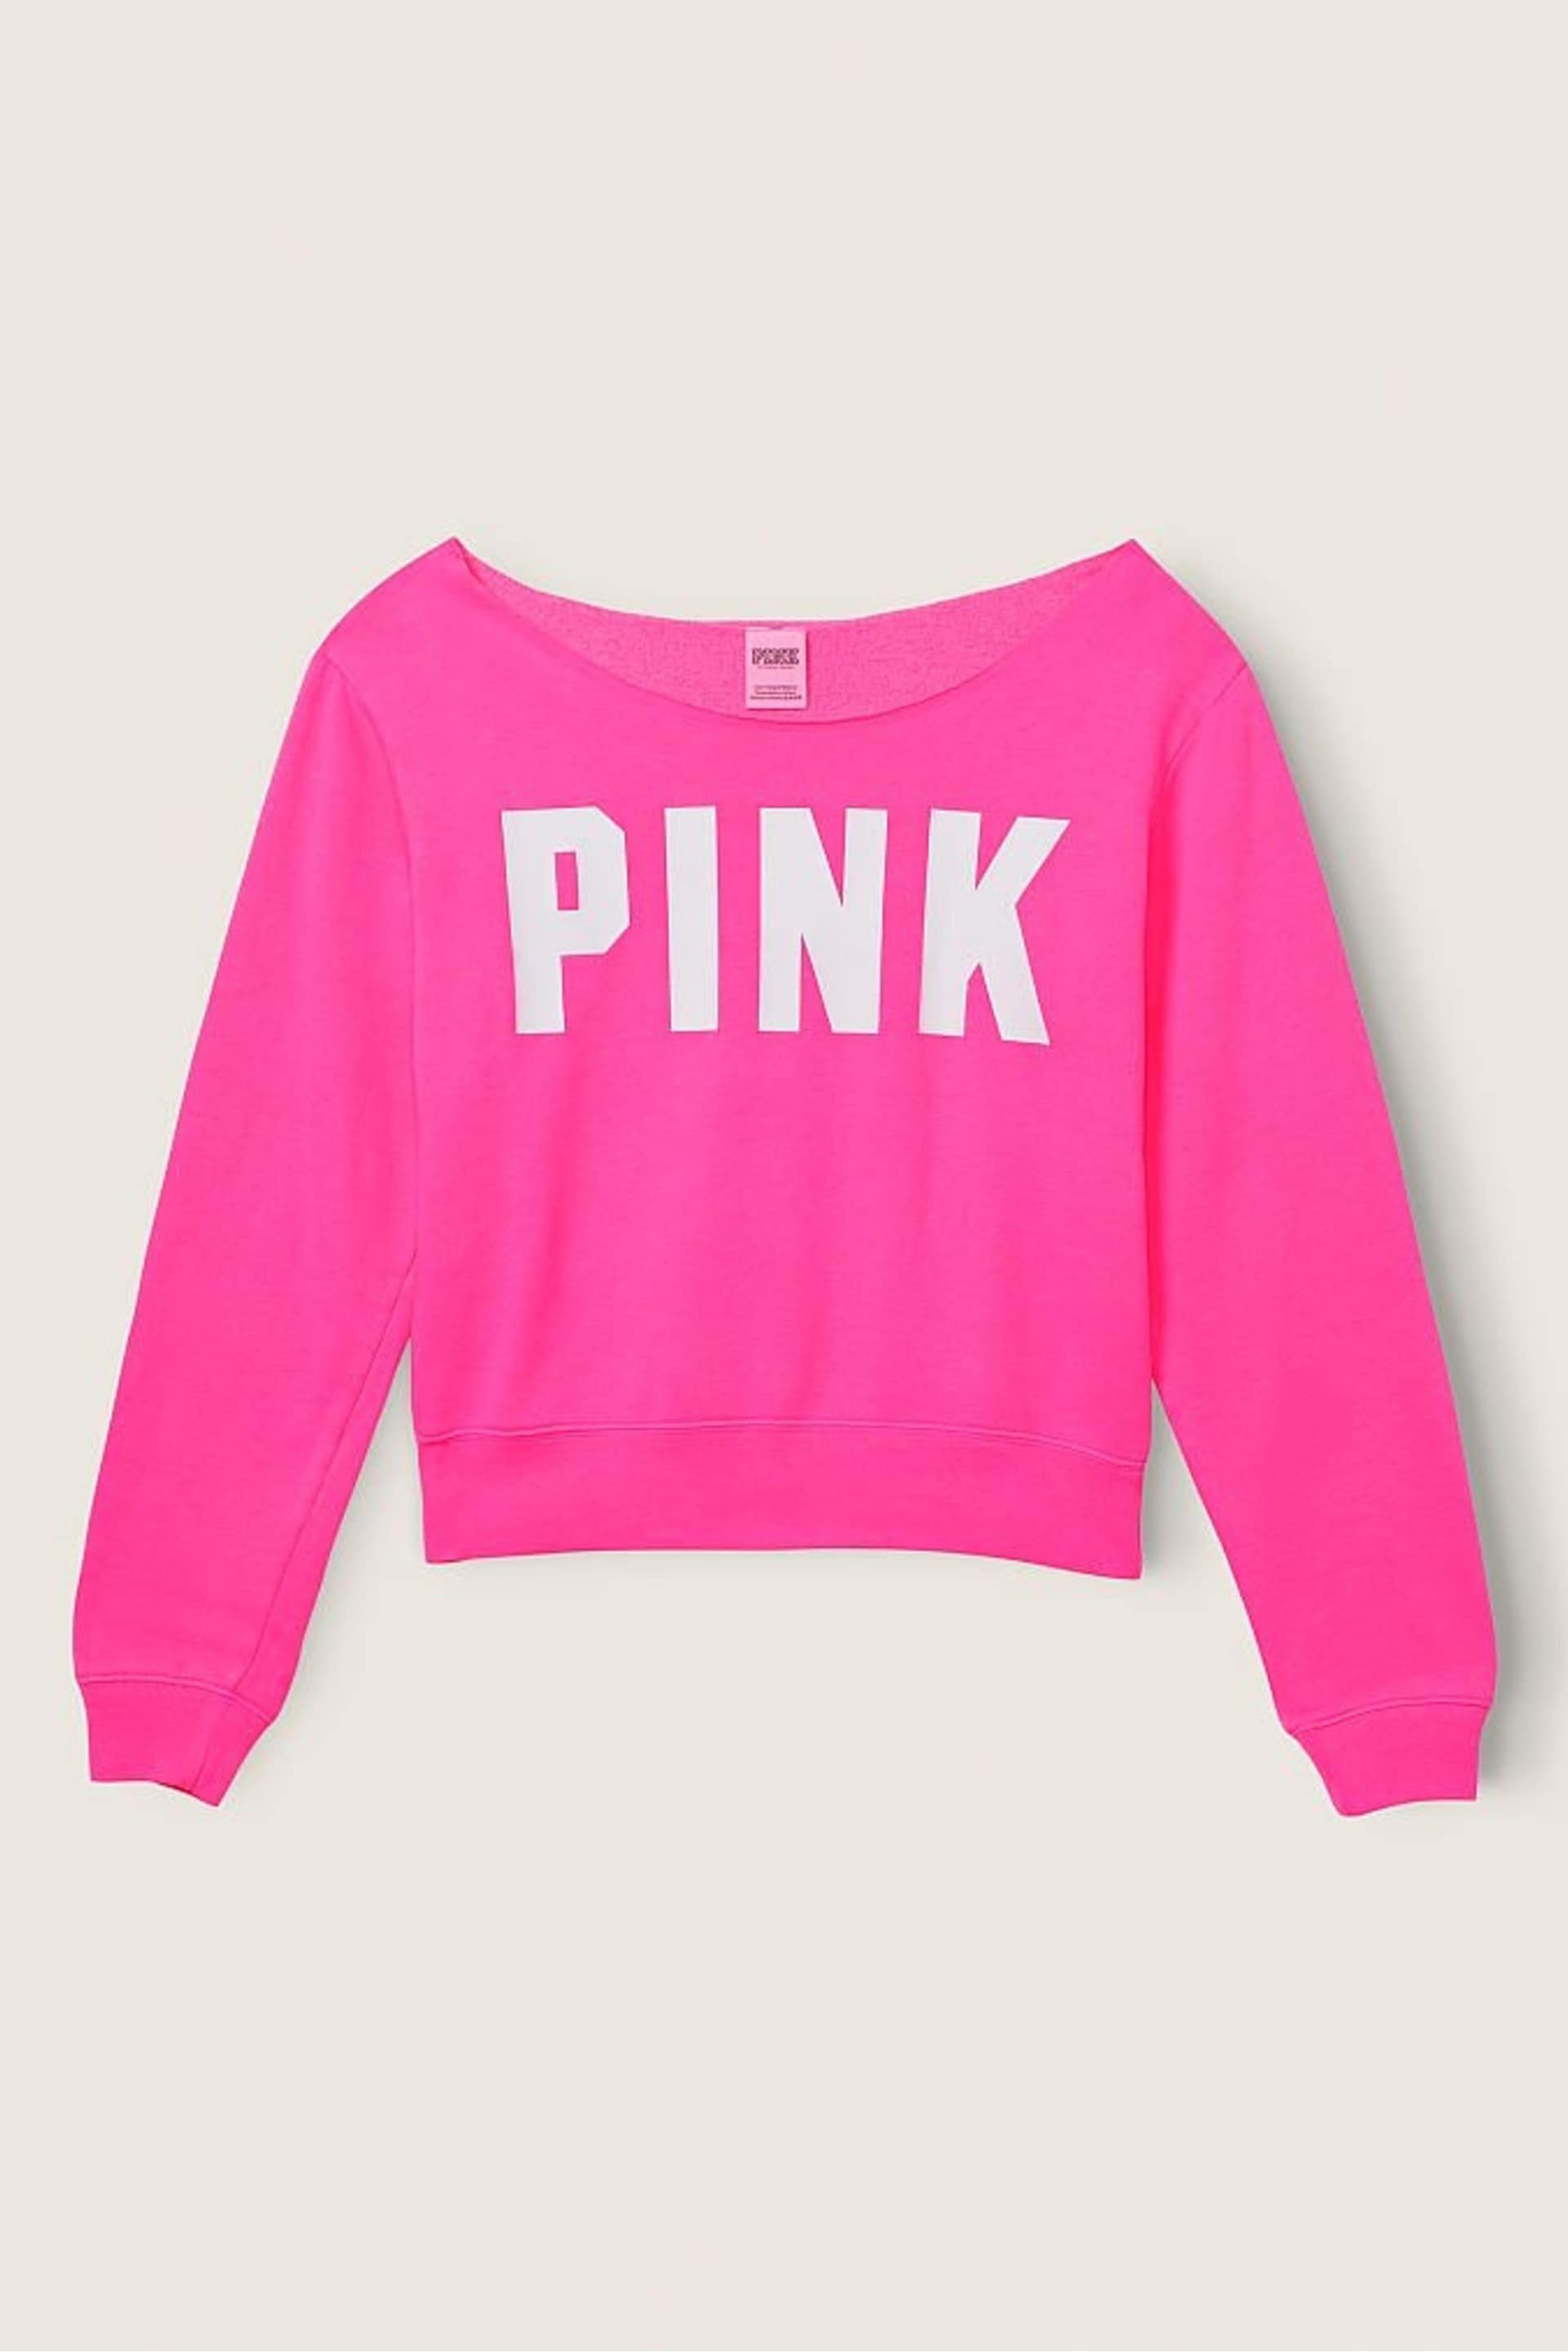 Victoria's Secret PINK Everyday Lounge Off The Shoulder Sweatshirt - Image 3 of 3